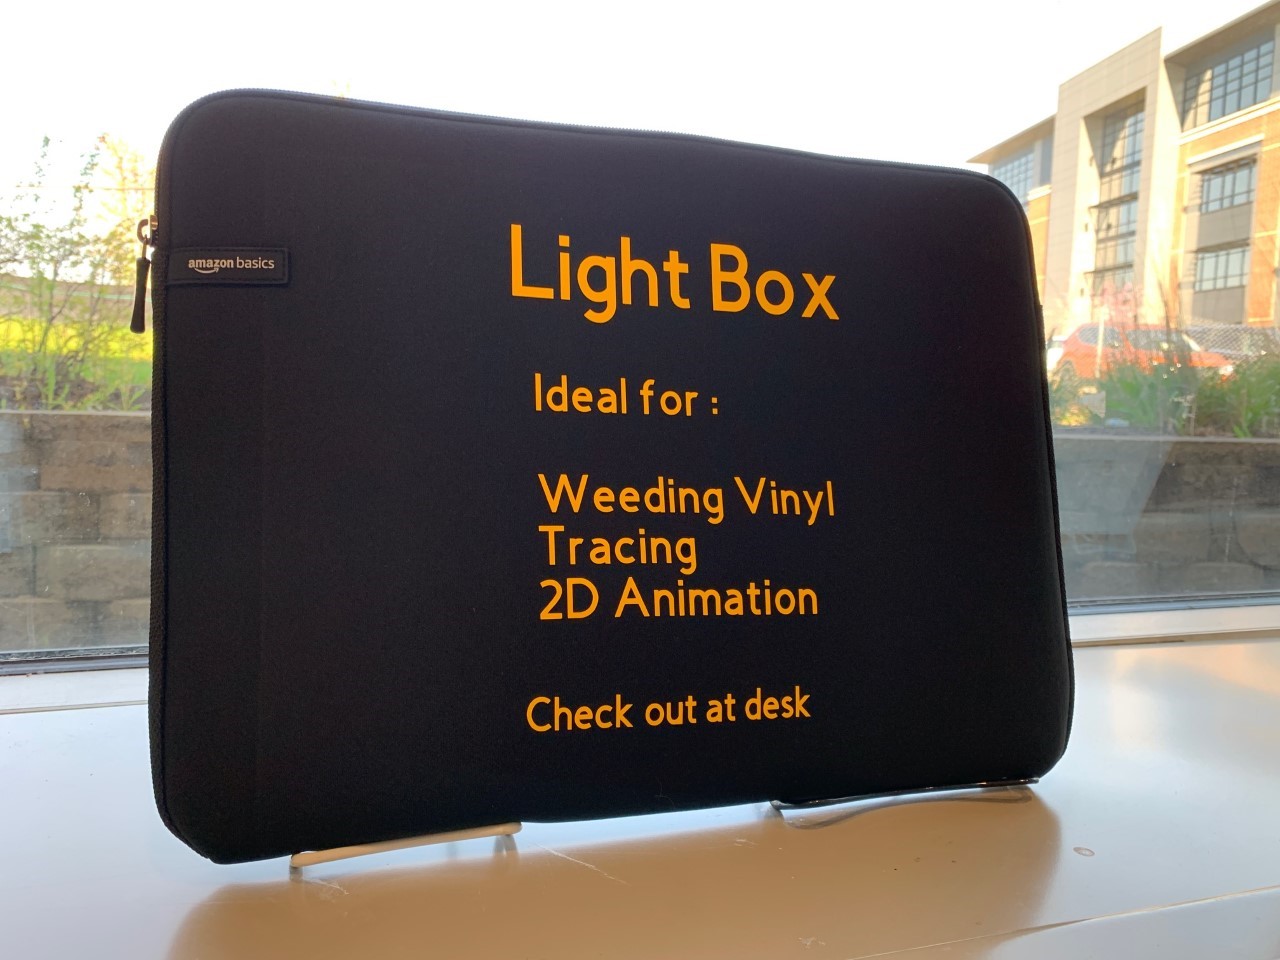 Introducing Ignite’s New Light Box